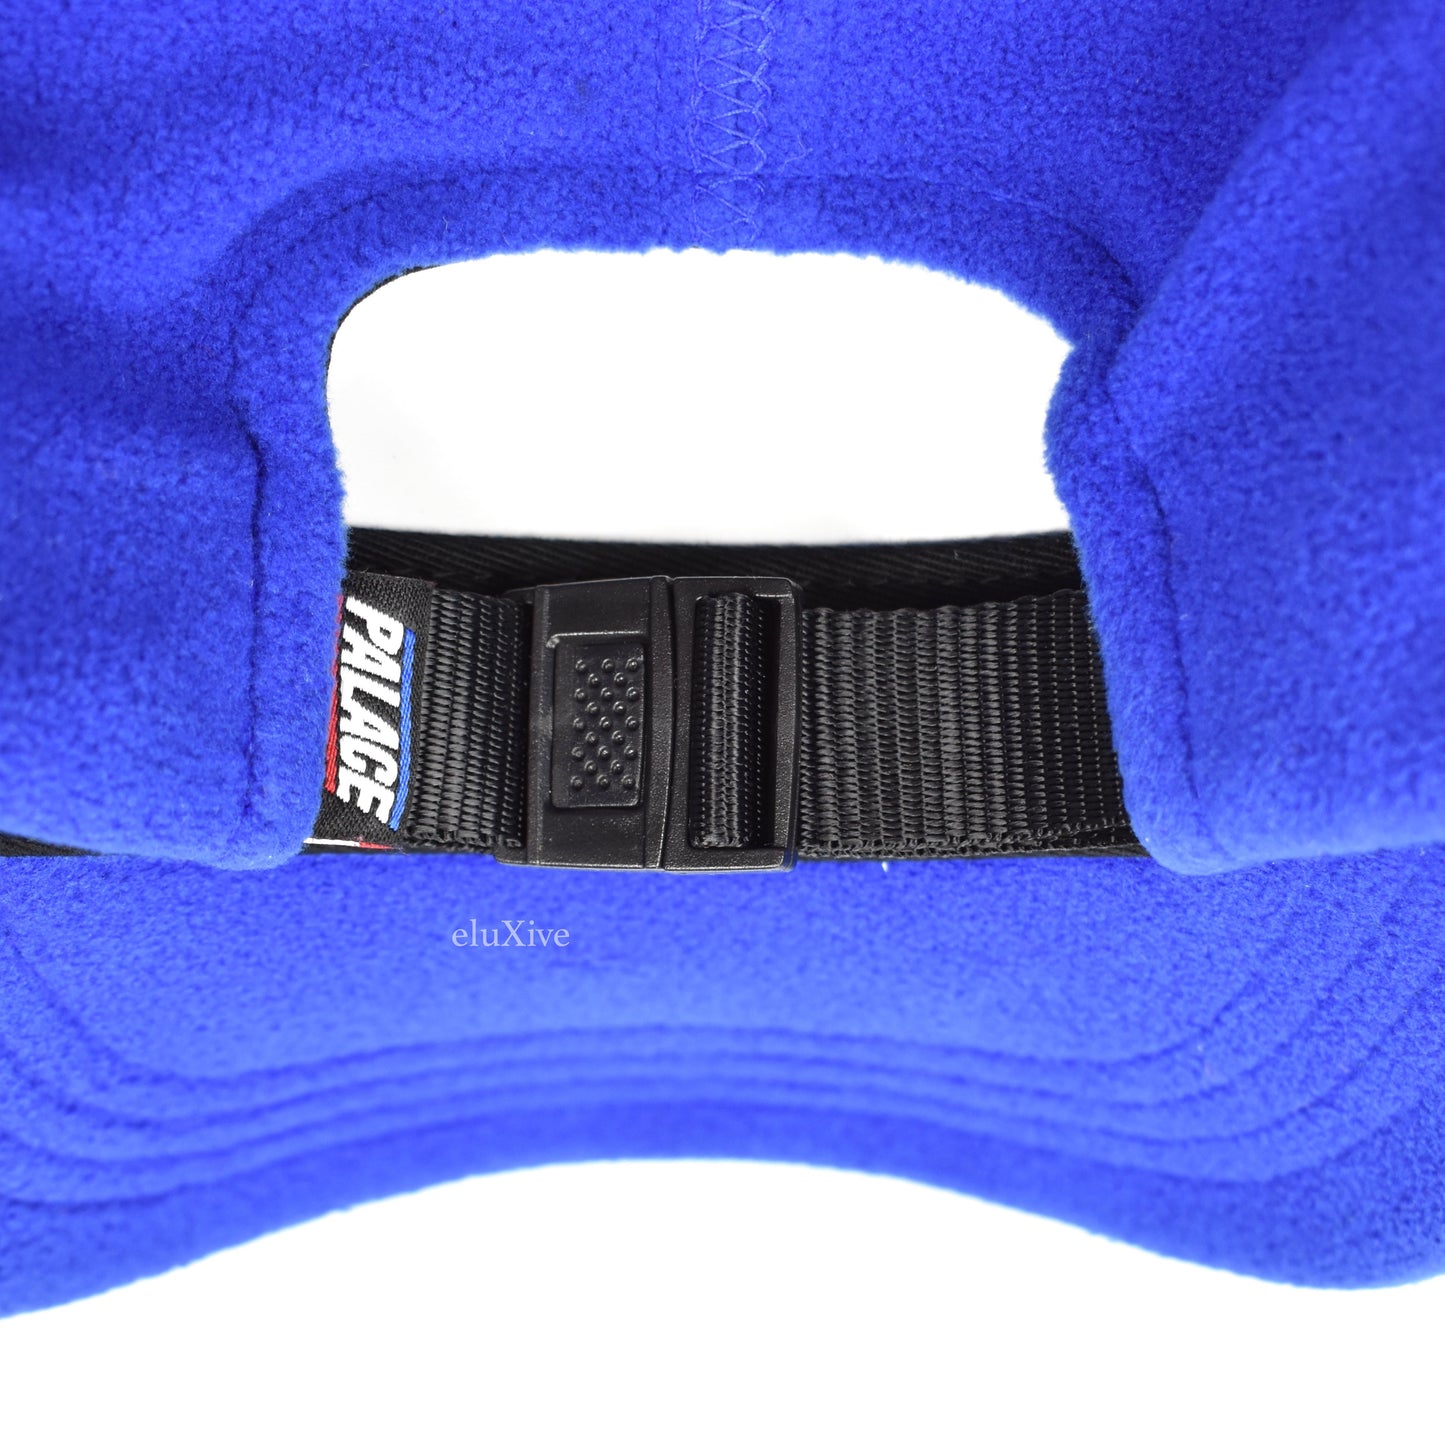 Palace - Fleece Line Logo Hat (Blue)